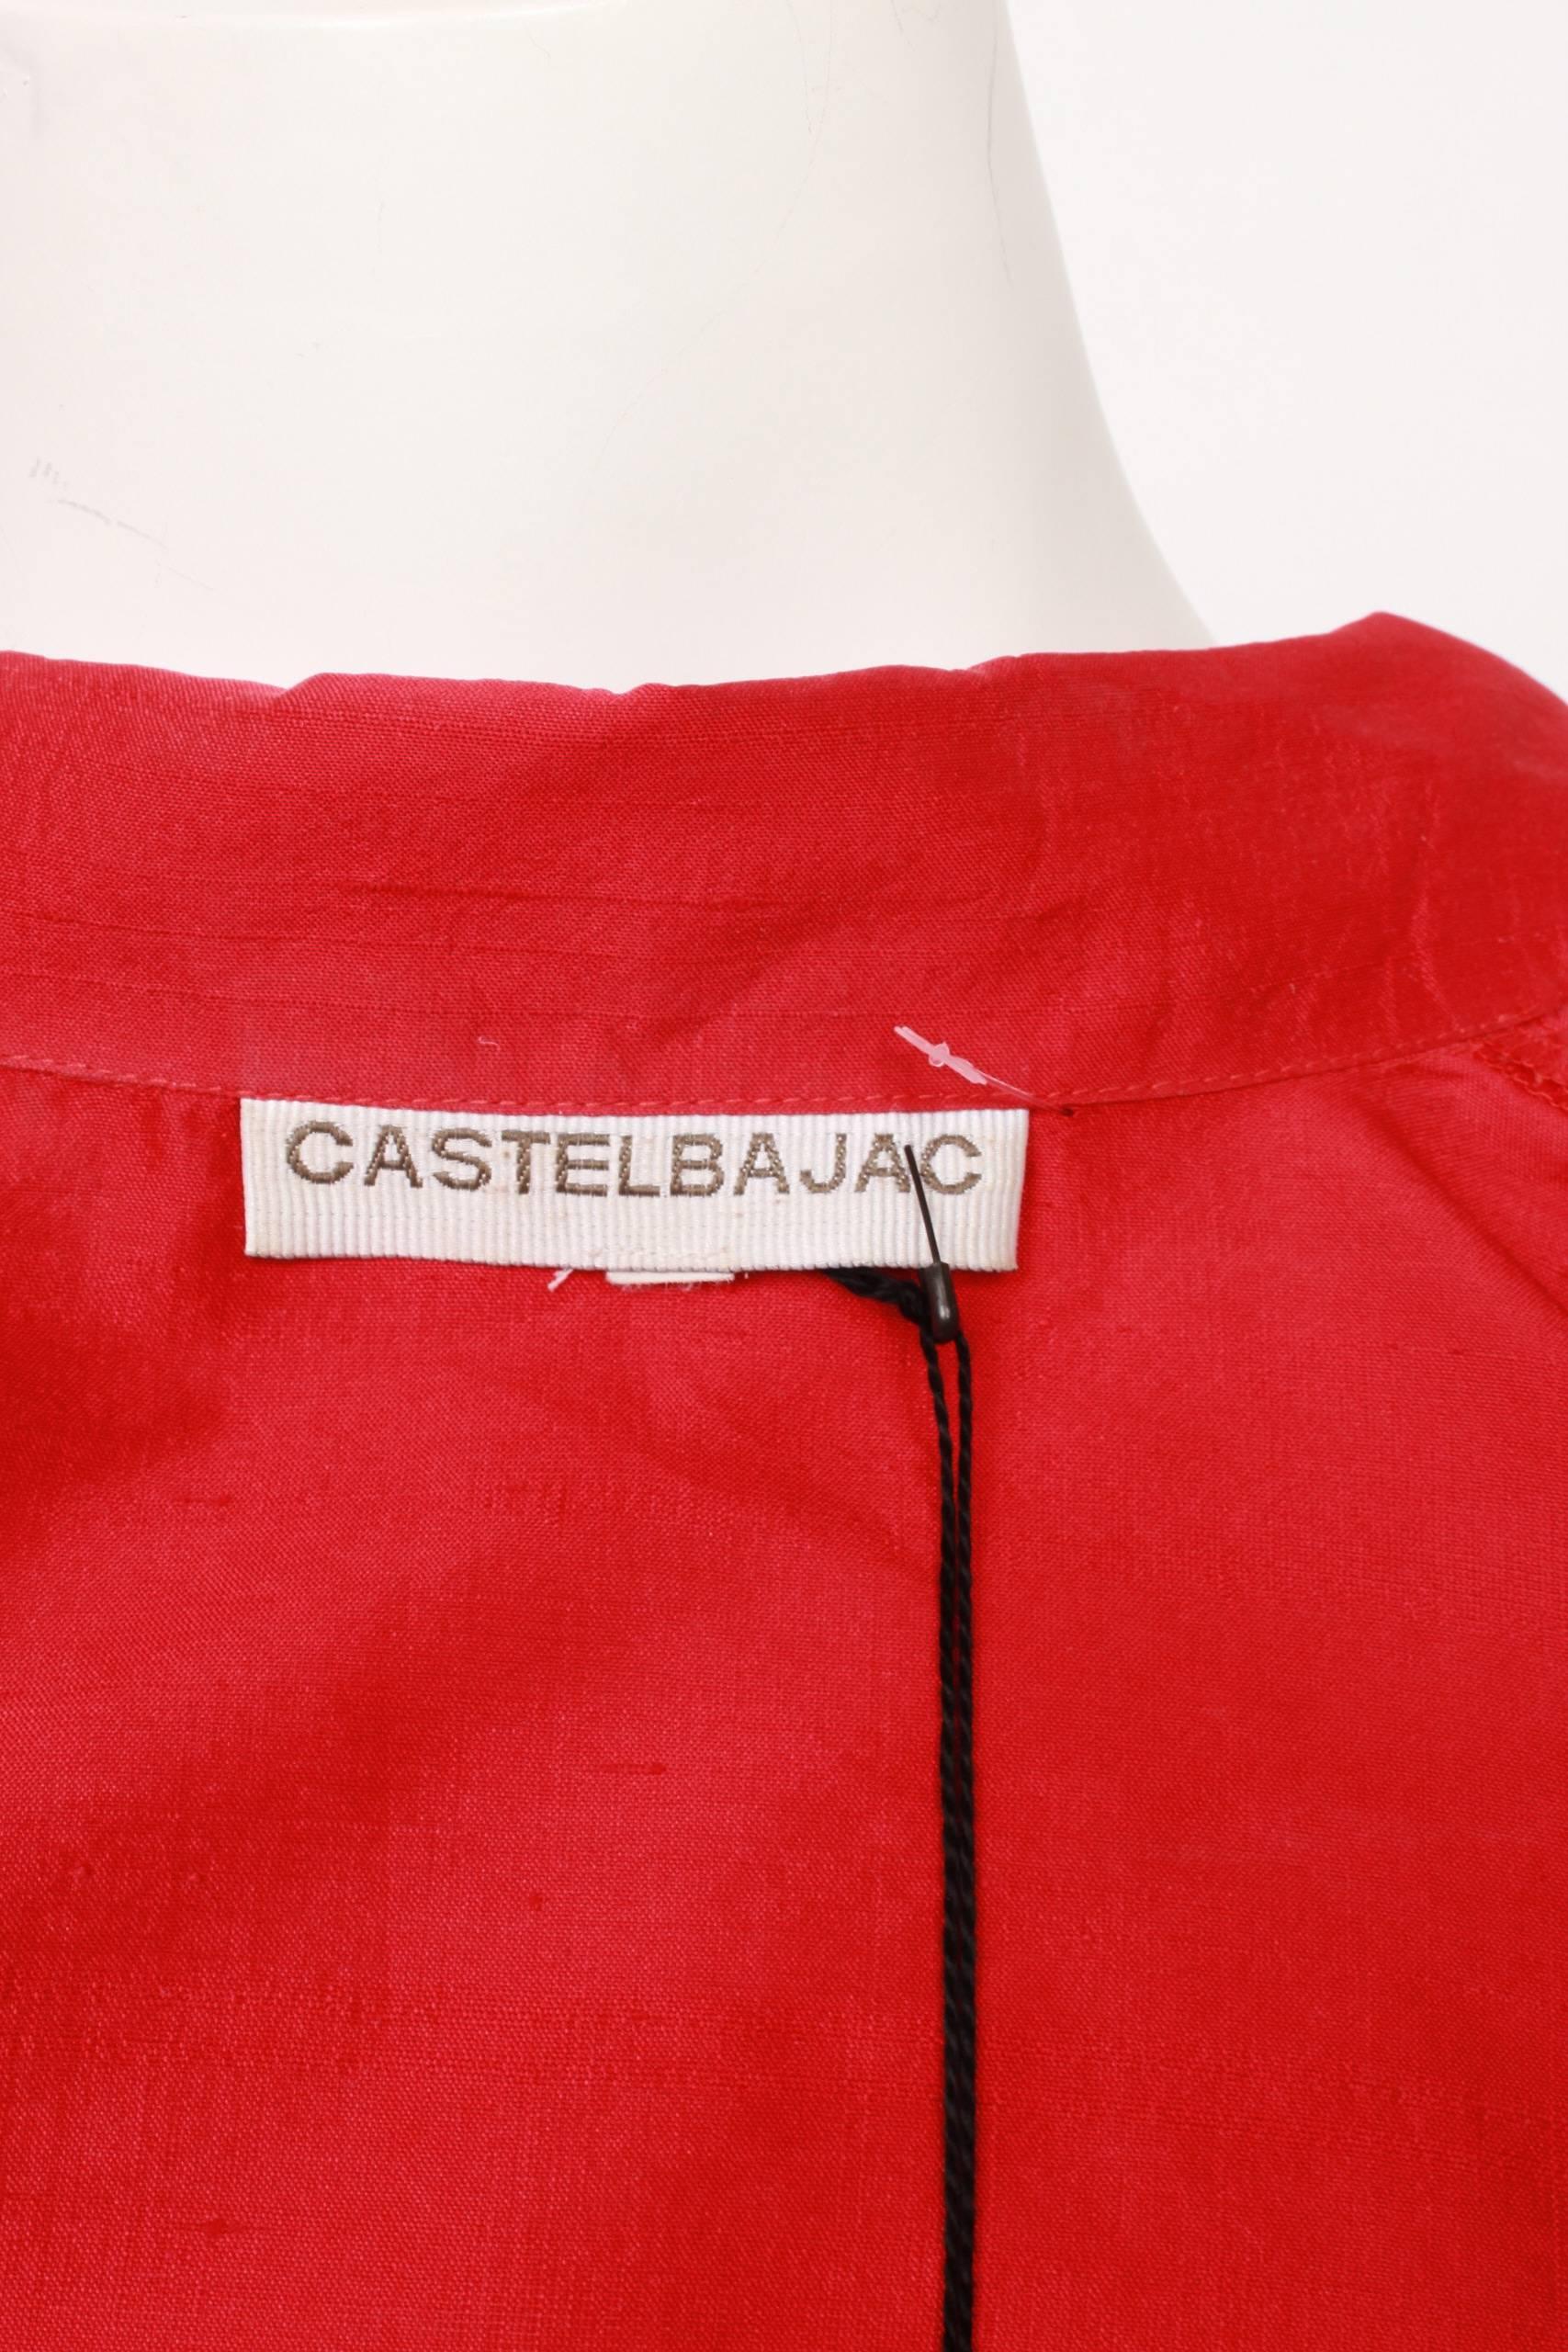 Castelbajac Red Silk Shirt For Sale 1